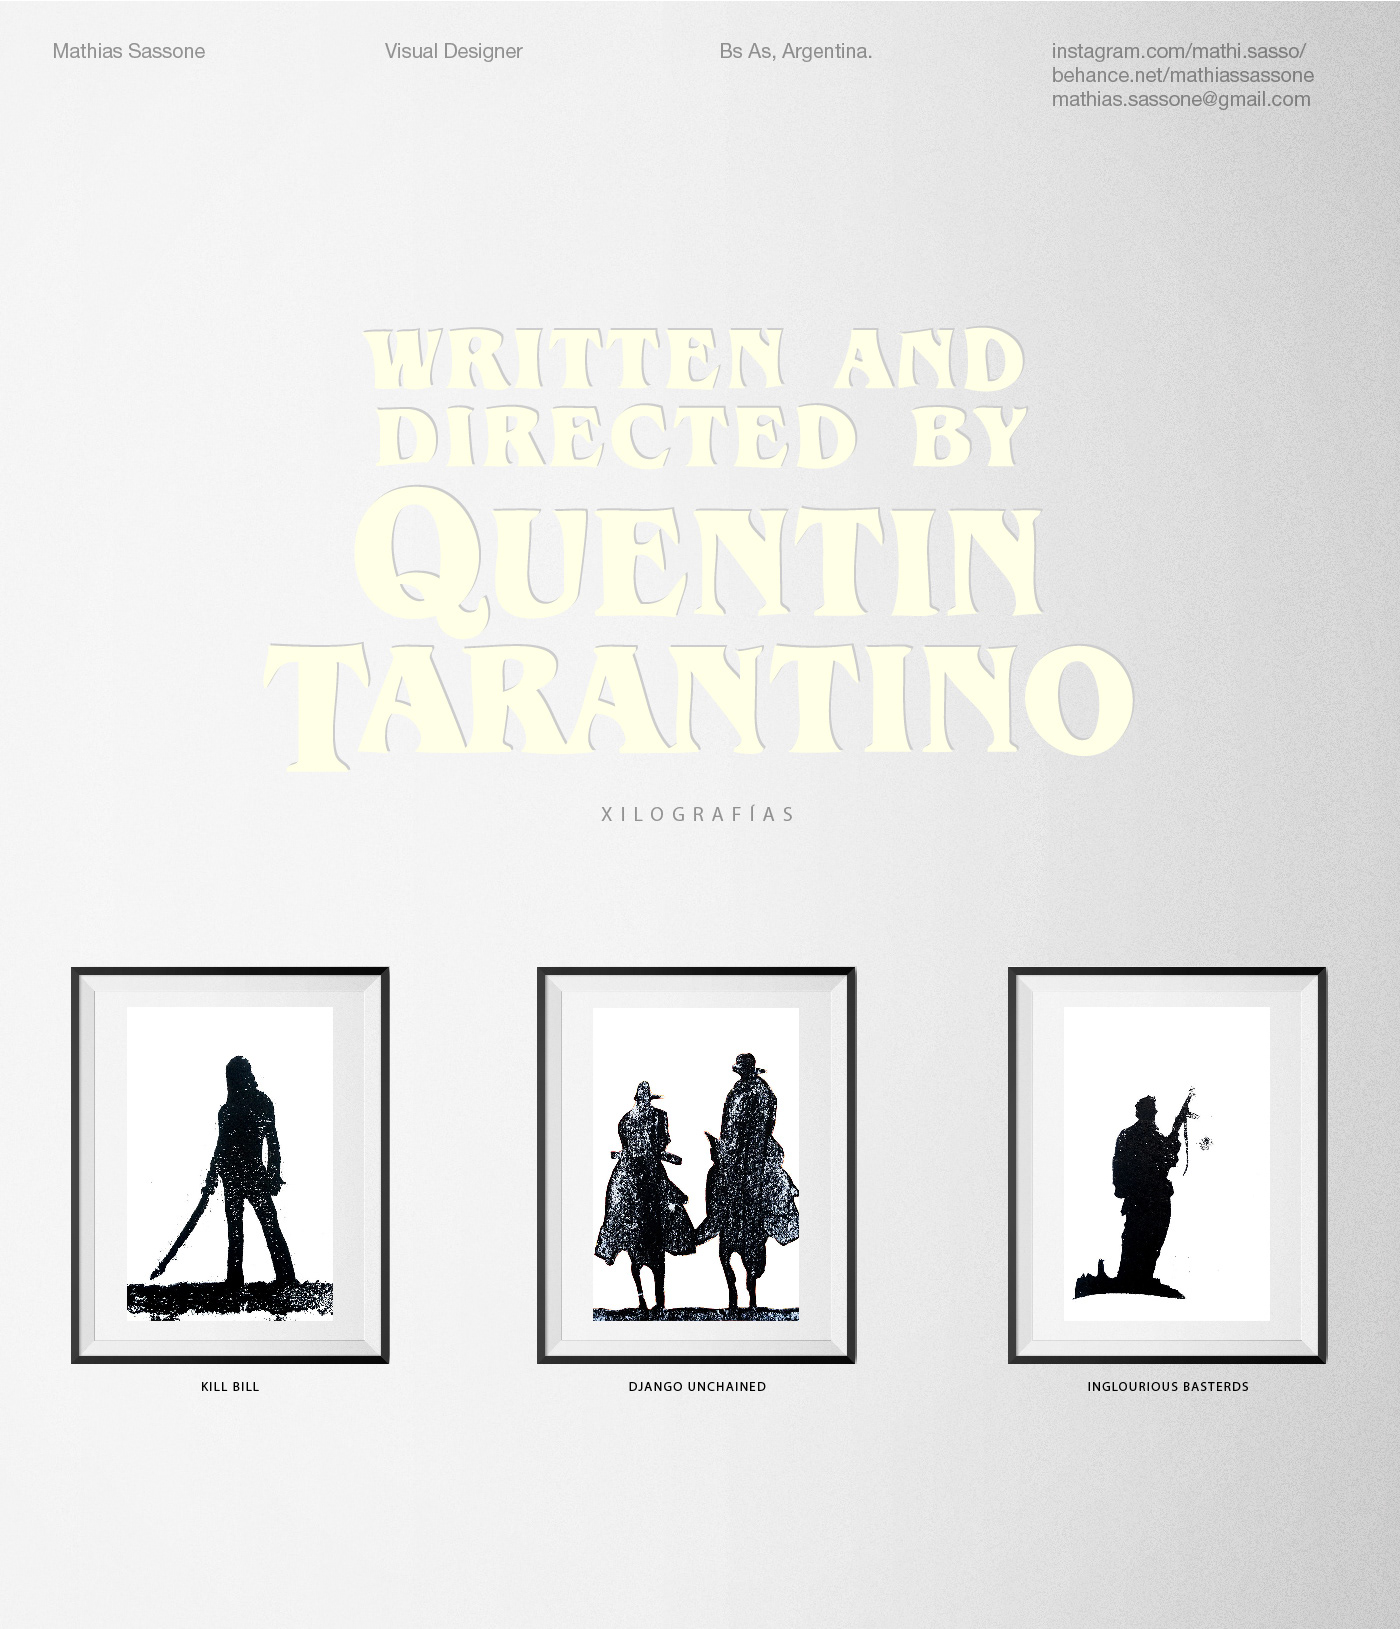 kill bill Tarantino Django Unchained inglourious basterds Film   Xilography xilografia afiche poster